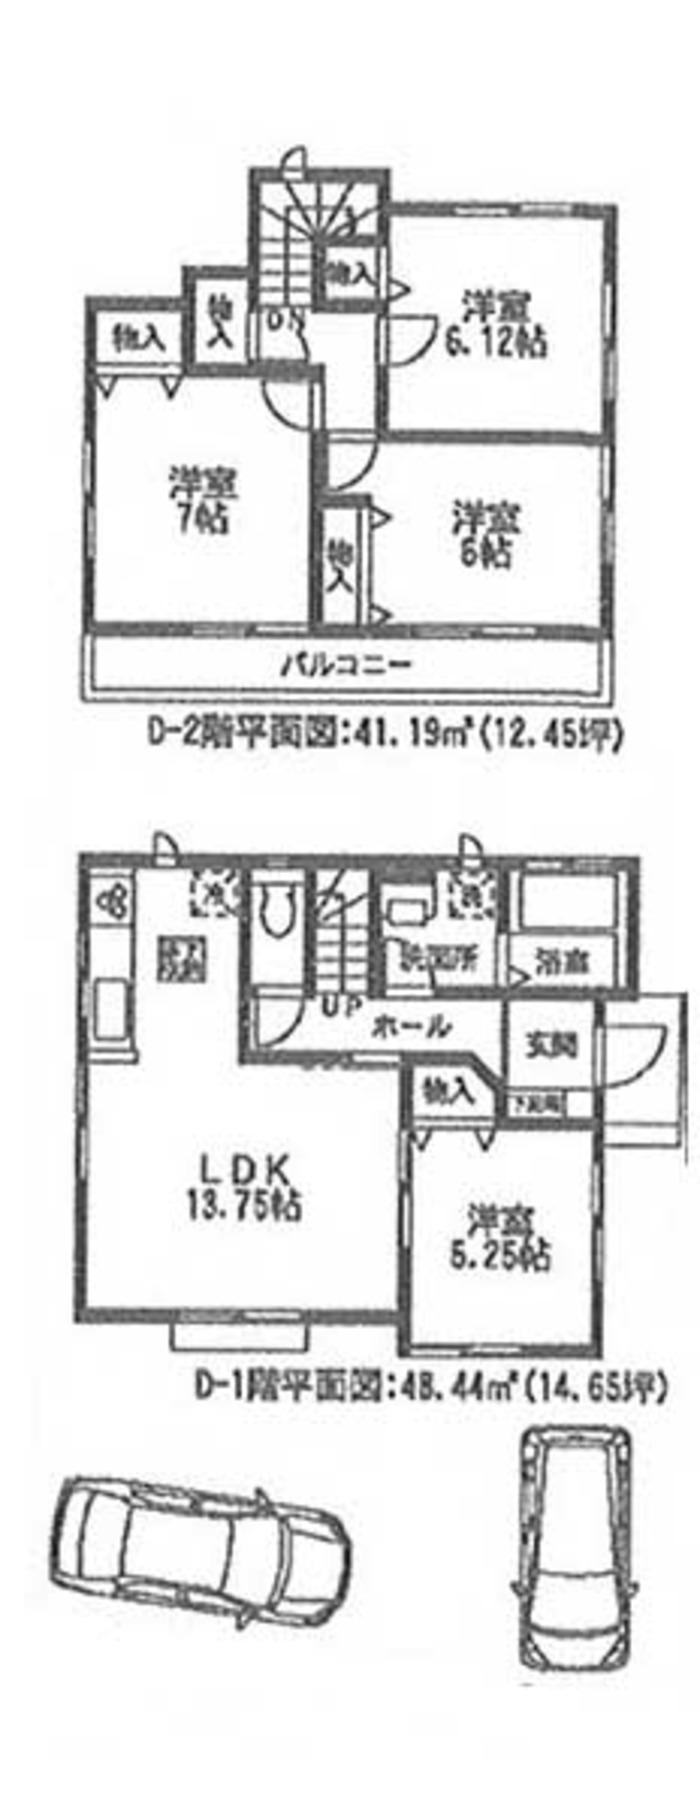 Floor plan. (D), Price 25,800,000 yen, 4LDK, Land area 112.34 sq m , Building area 89.63 sq m